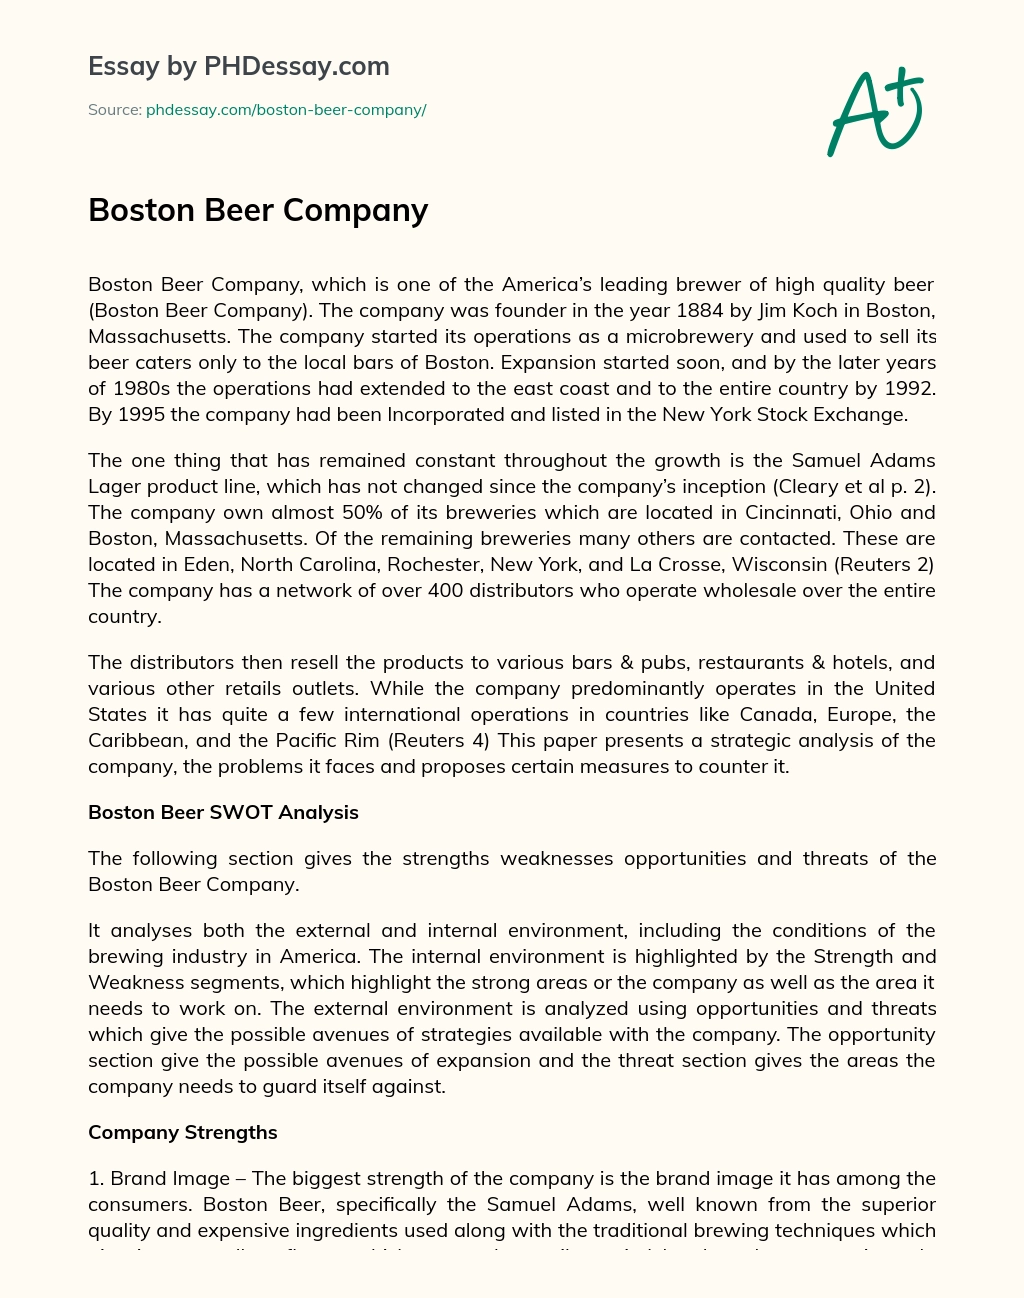 Boston Beer Company essay